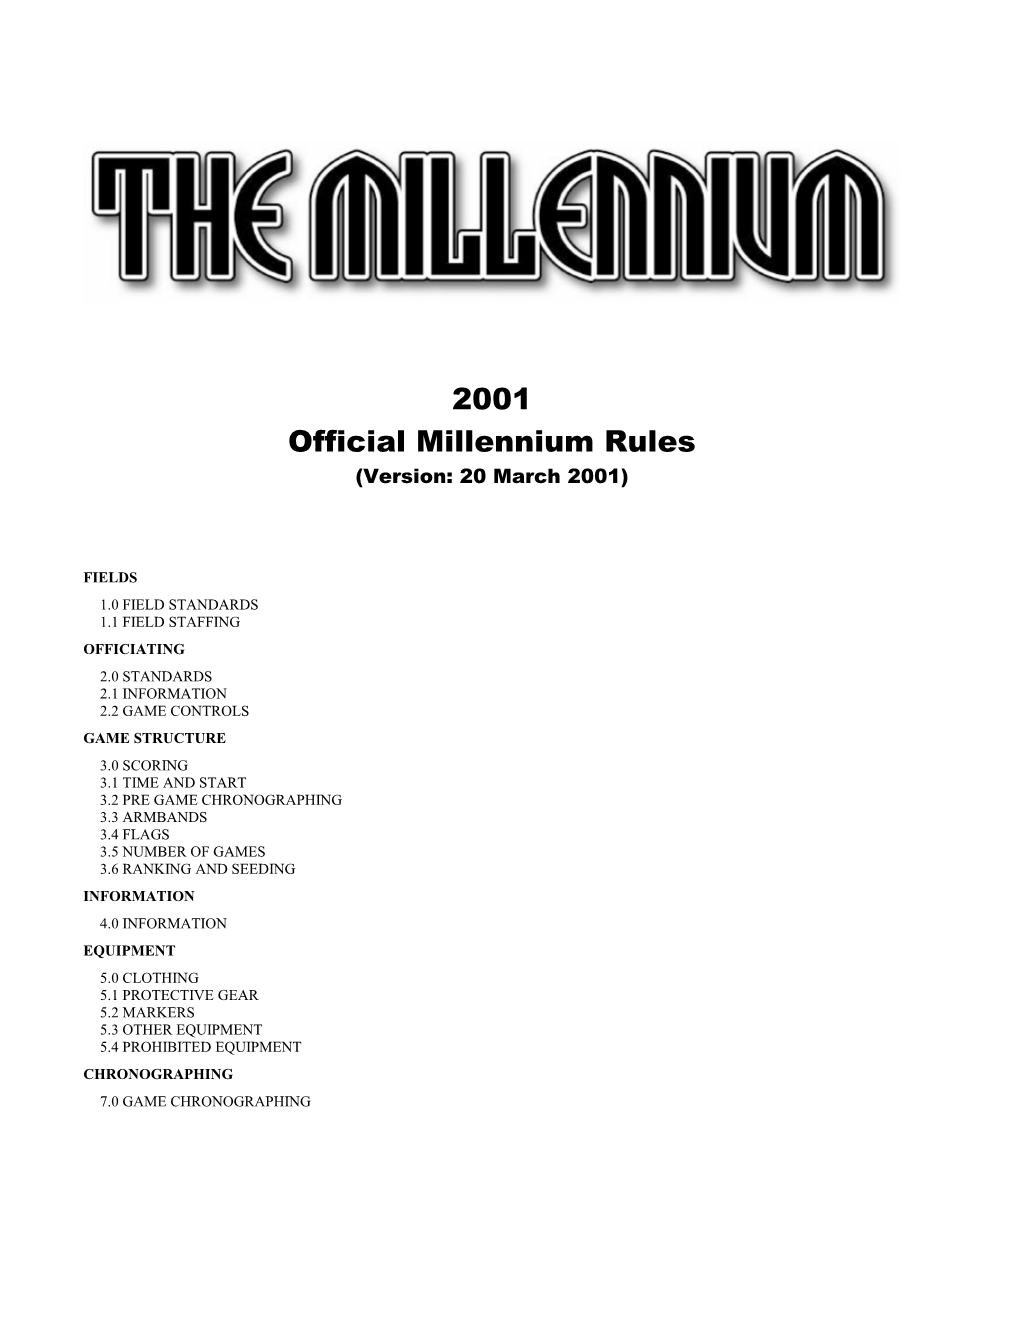 Official Millennium Rules